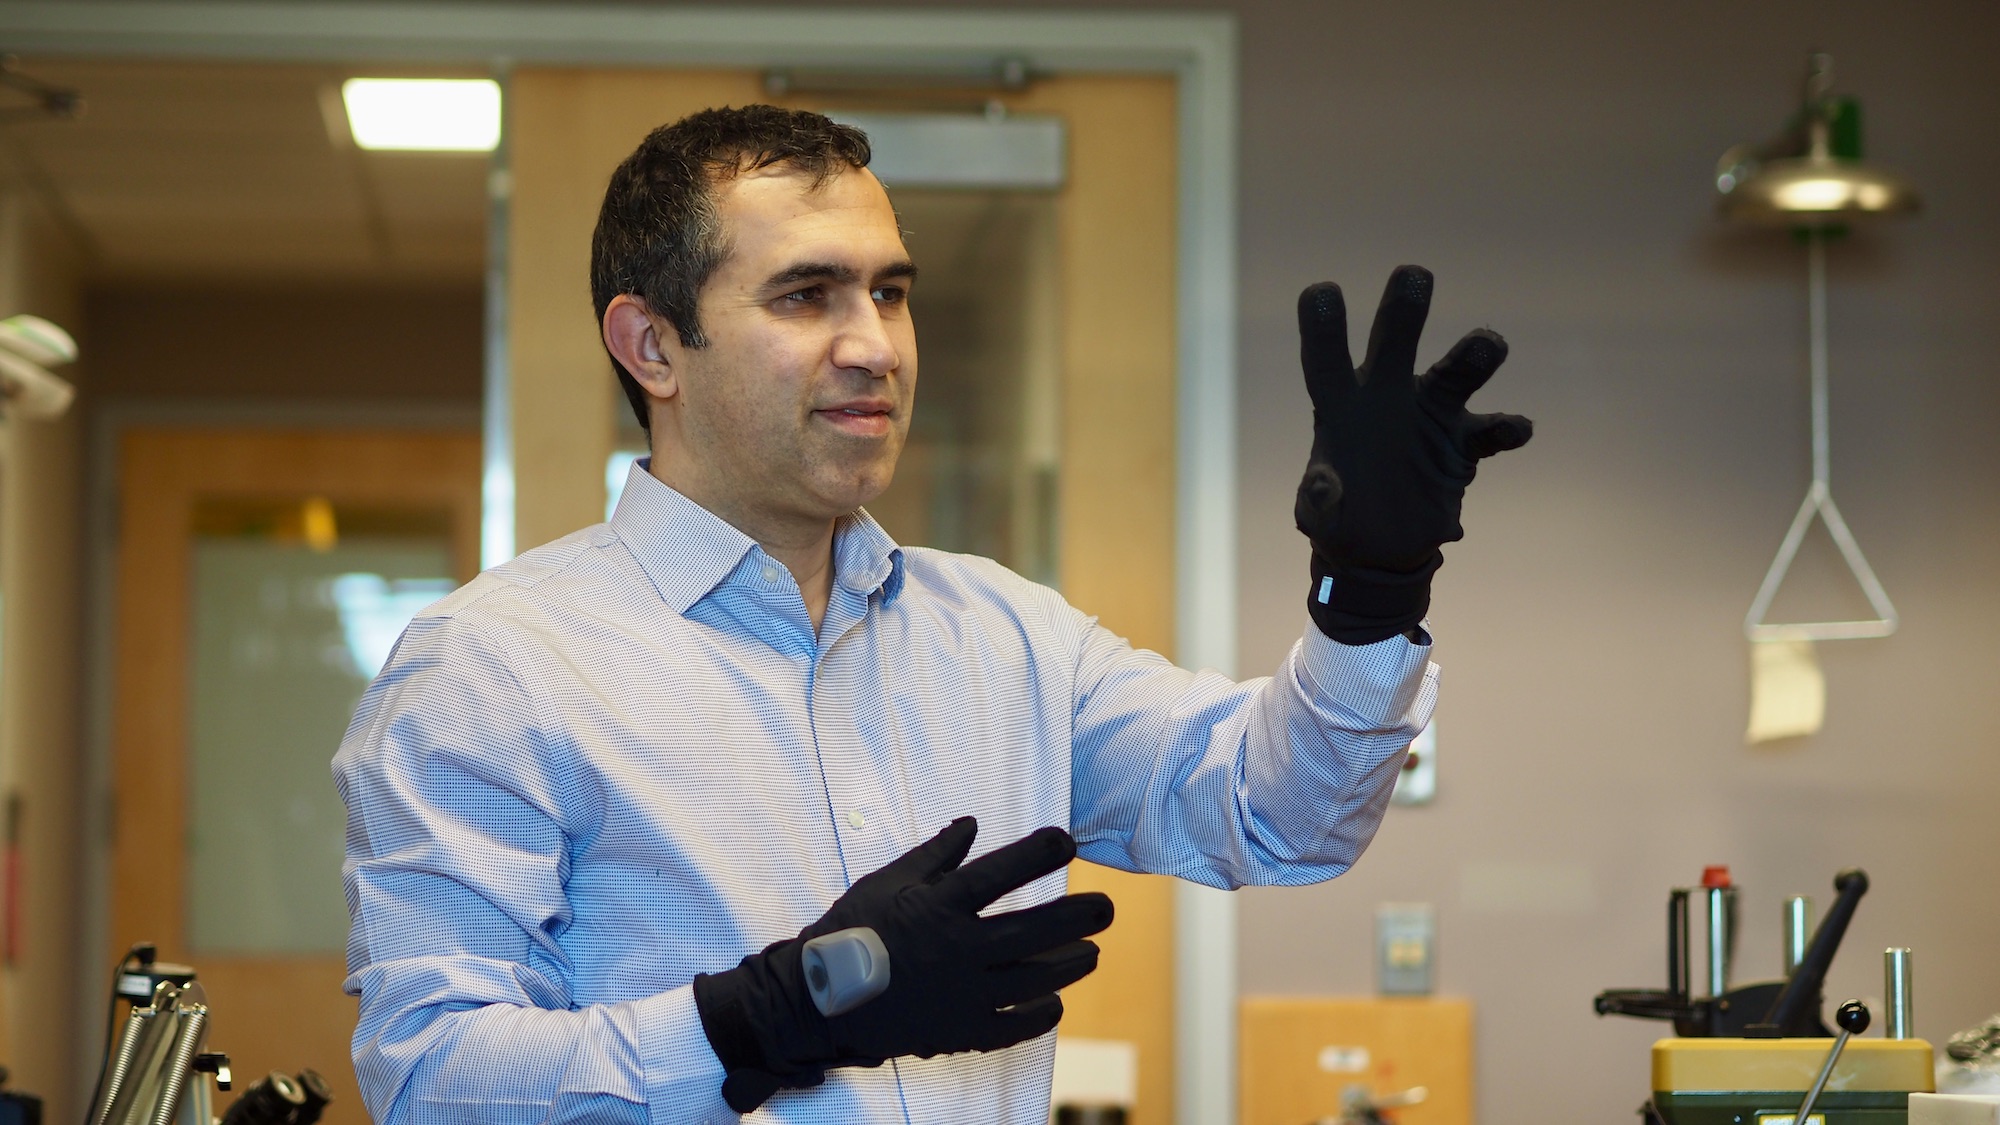 Dr. Peyman Servati pictured demonstrating the smart gloves being worn on him.